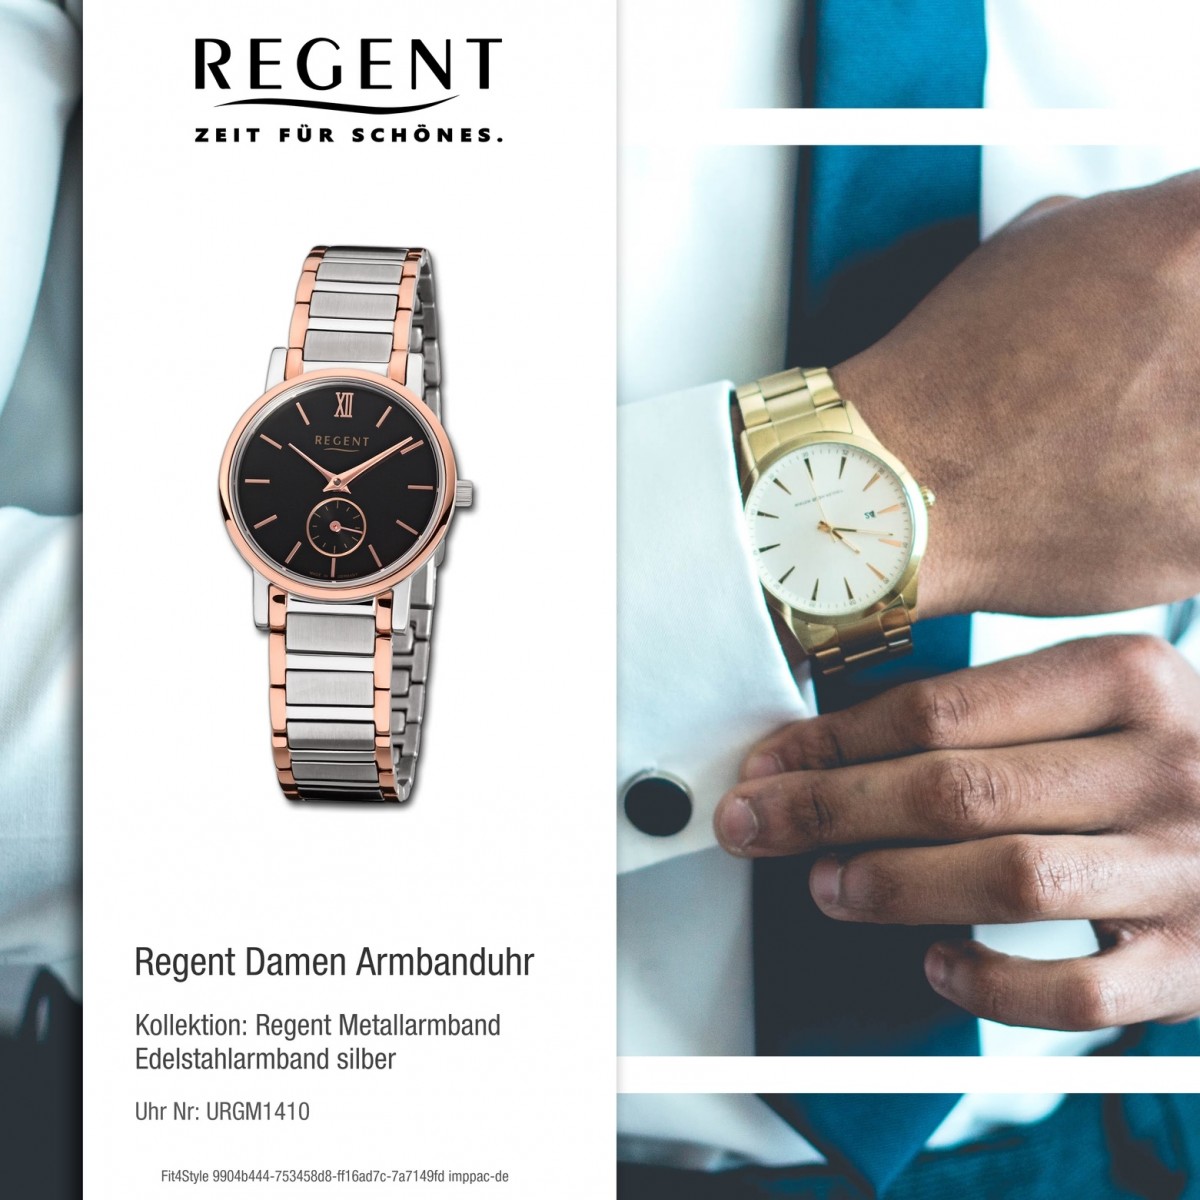 Quarz-Uhr Regent silber Edelstahl-Armband URGM1410 Damen-Armbanduhr rosegold Uhr